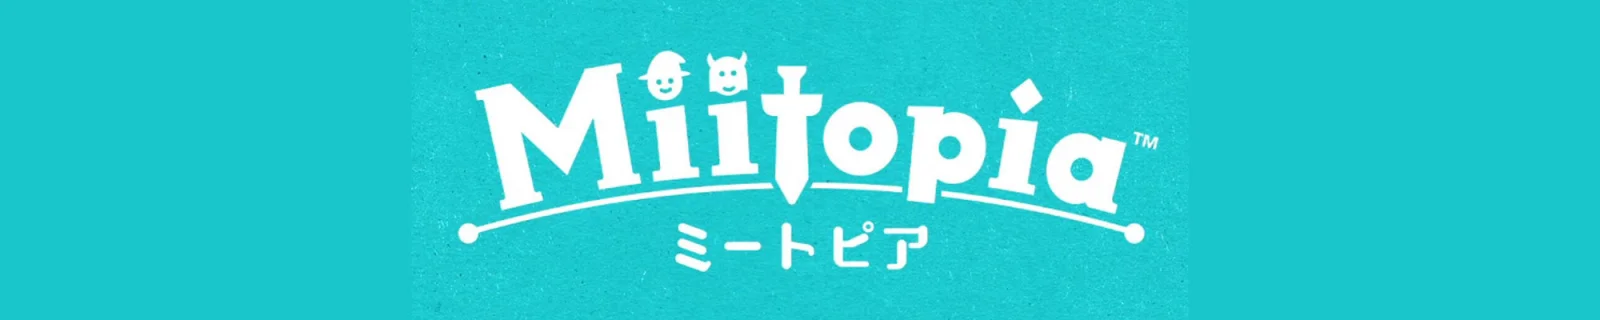 《Miitopia》将于12月8日发售，预告篇试玩今日配信